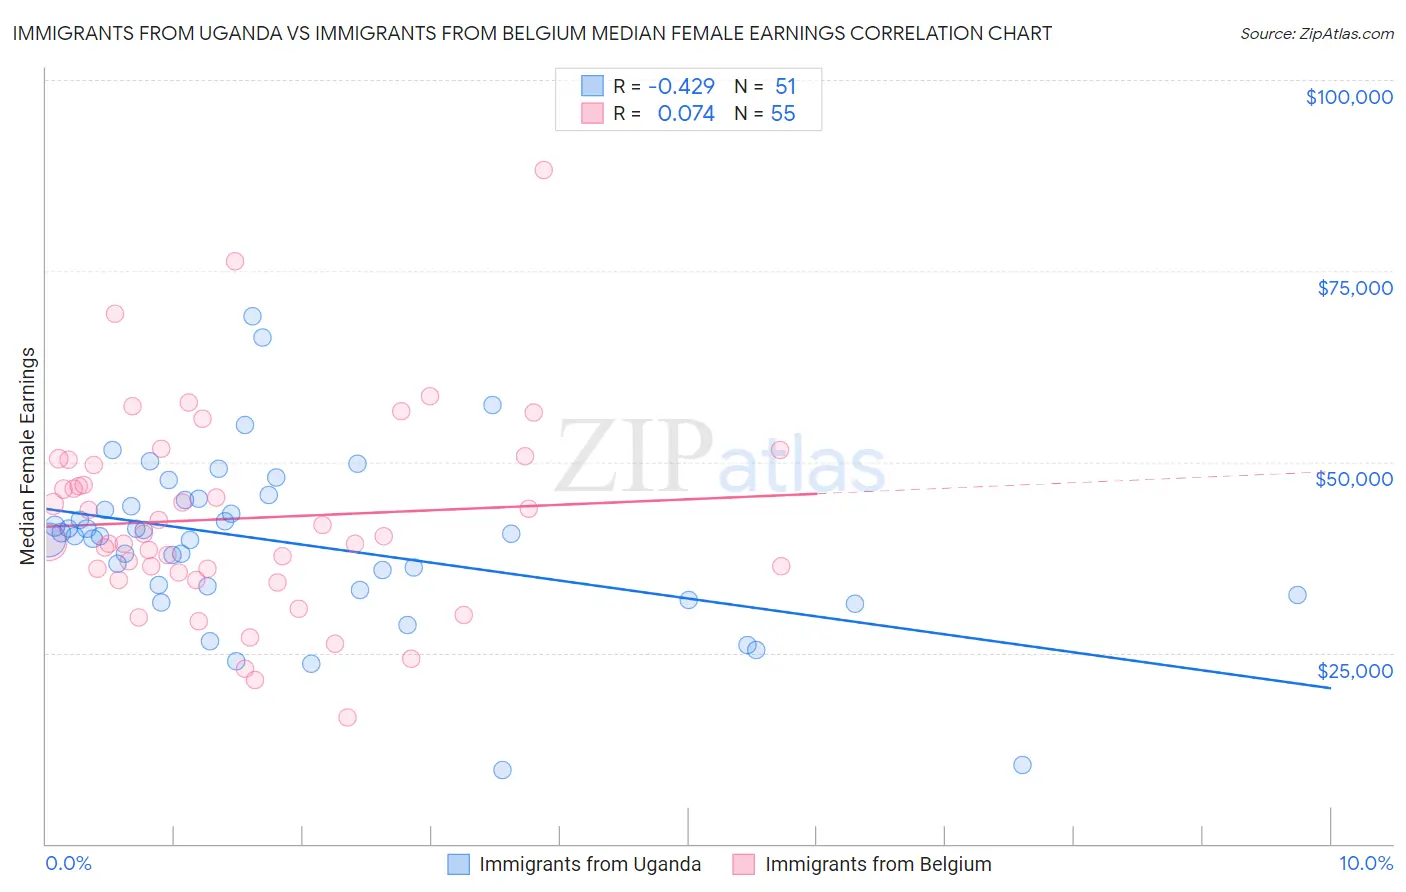 Immigrants from Uganda vs Immigrants from Belgium Median Female Earnings